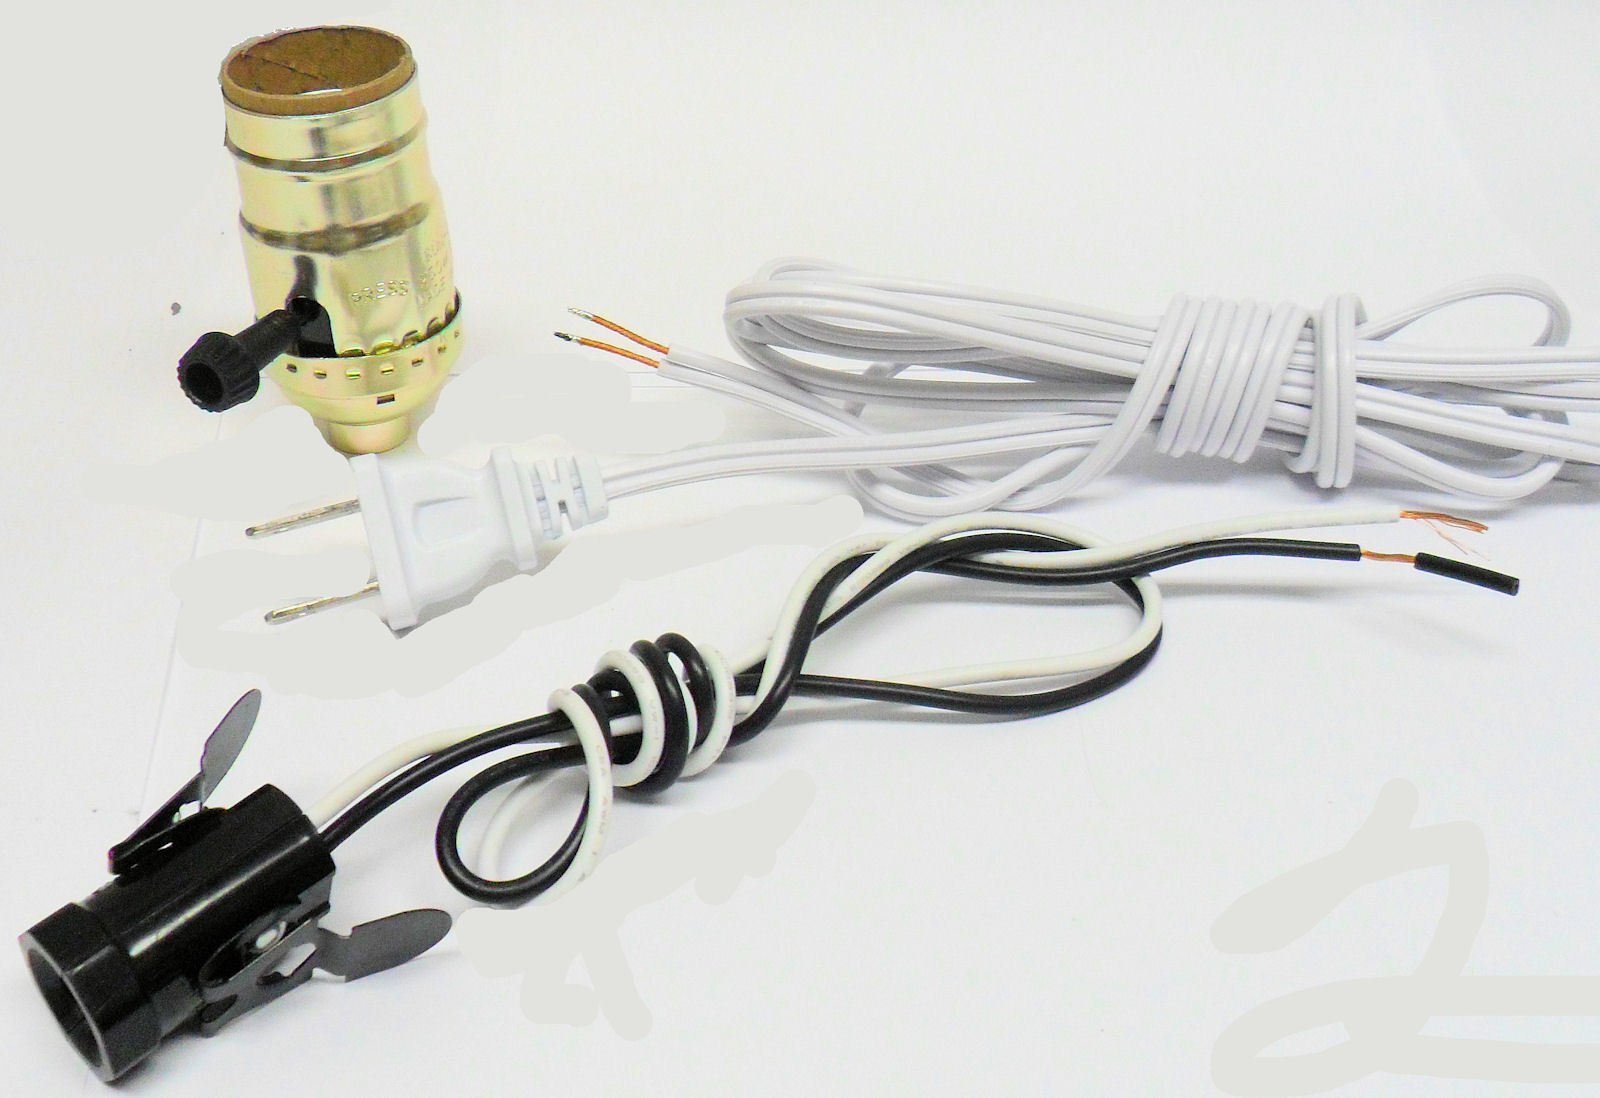 Lamp parts: Nite-lite lamp kit w/white cord, TR-209, TR-44